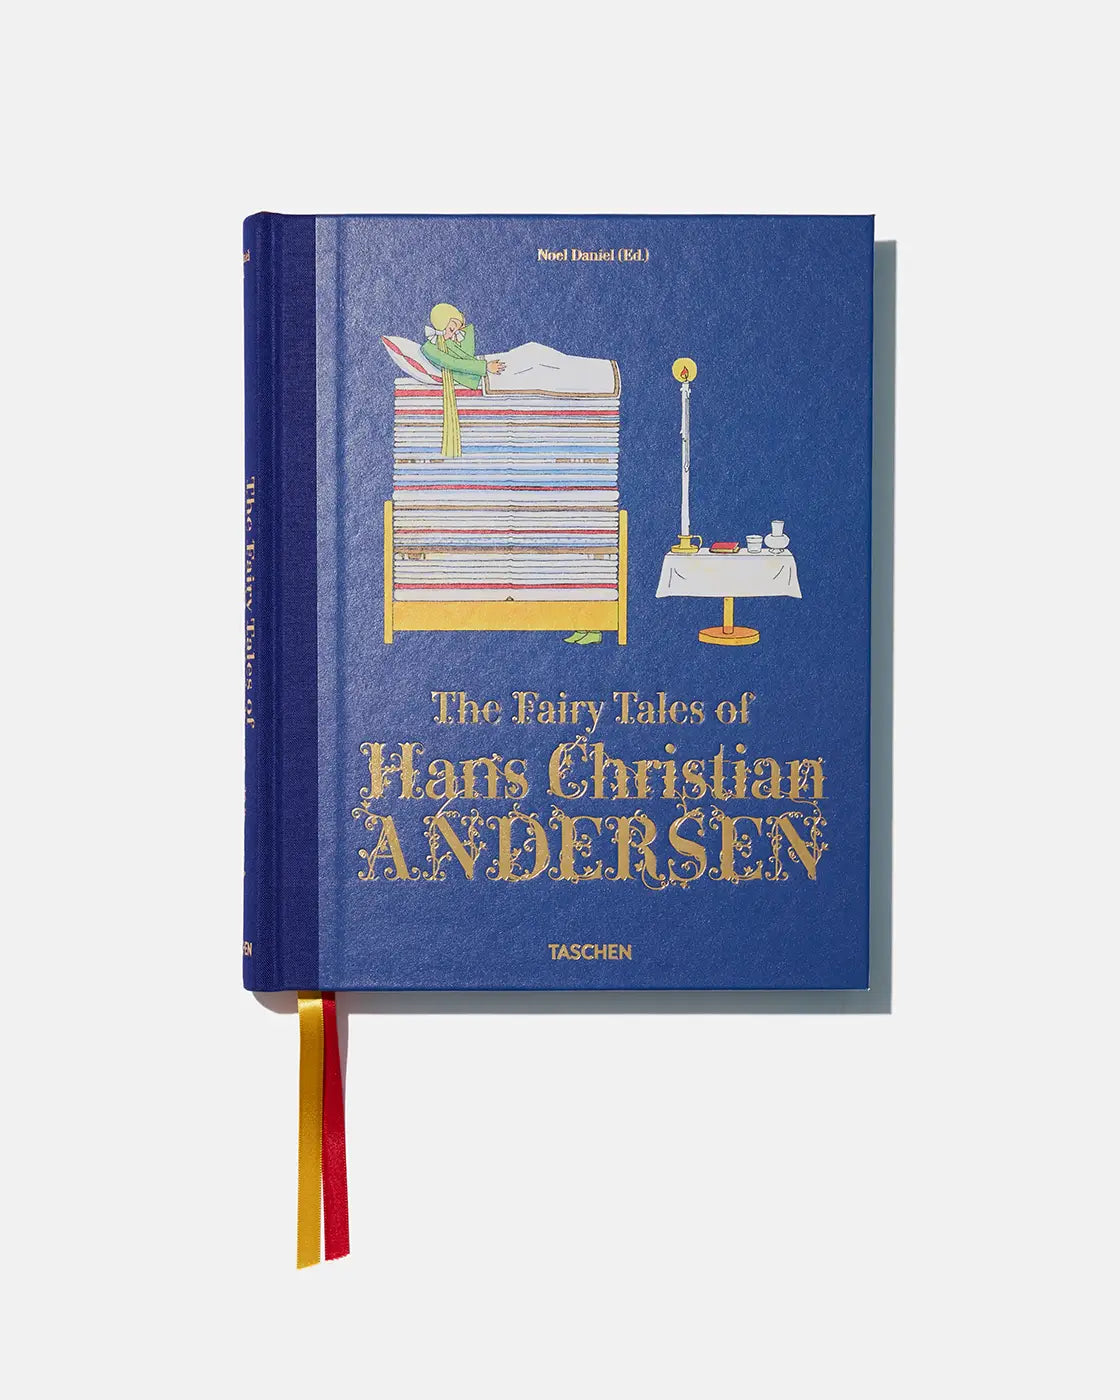 TASCHEN - The Fairy Tales of Hans Christian Andersen